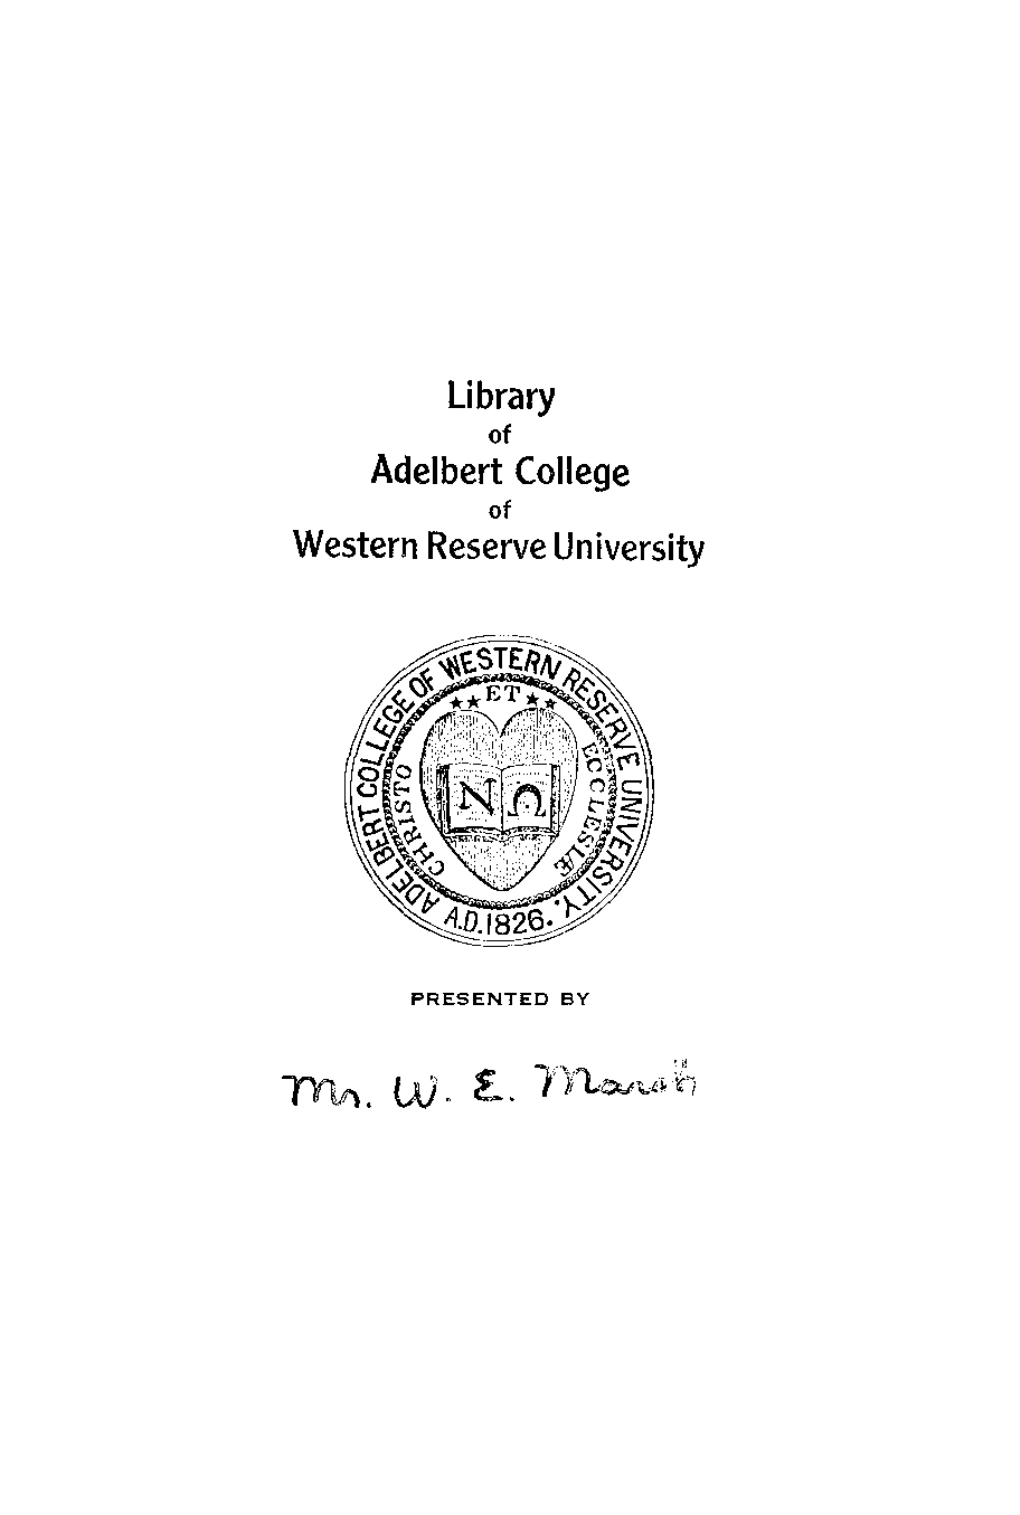 Library Adelbert College Western Reserve University